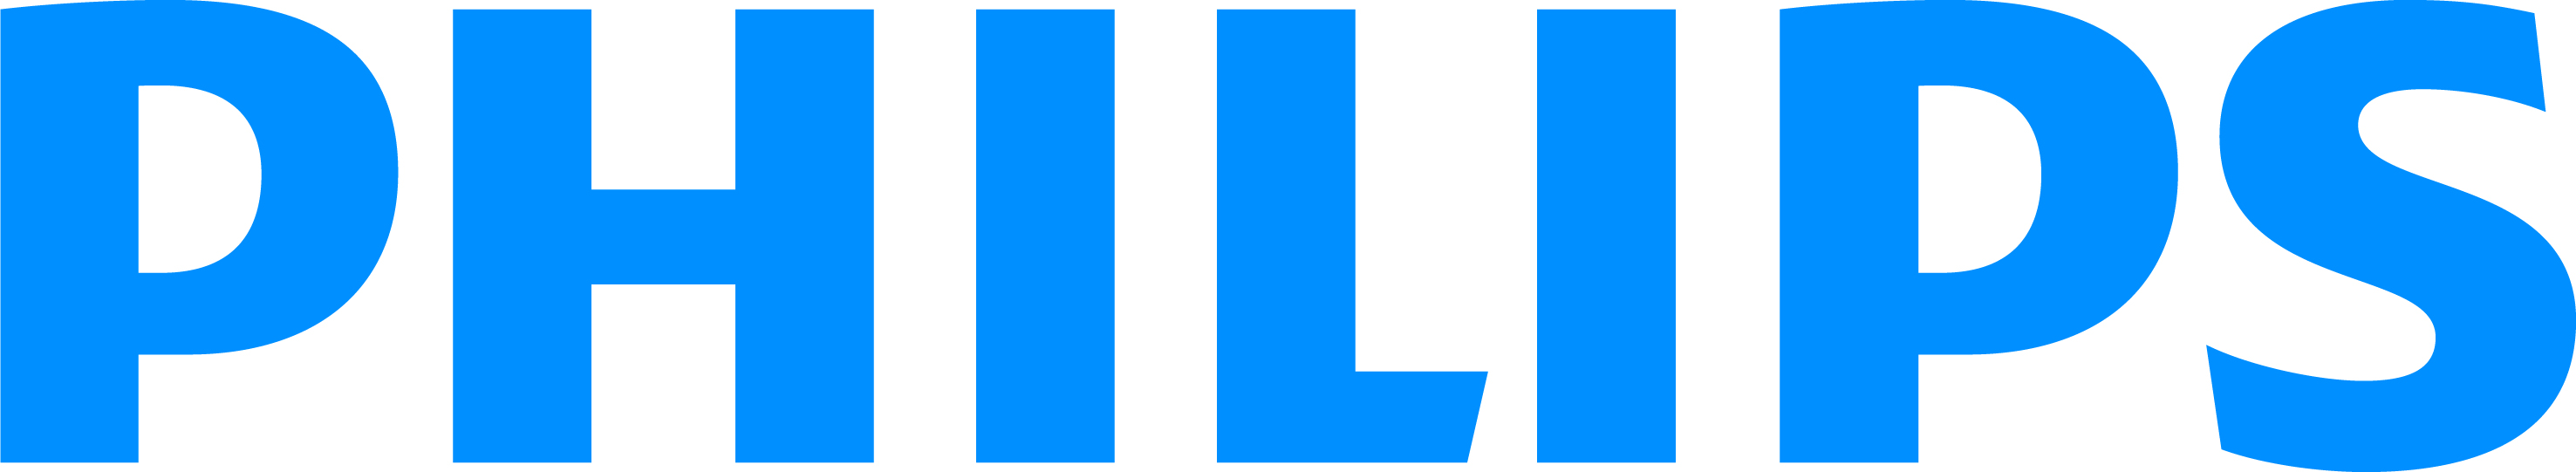 GARAGE FLORY - logo Philips